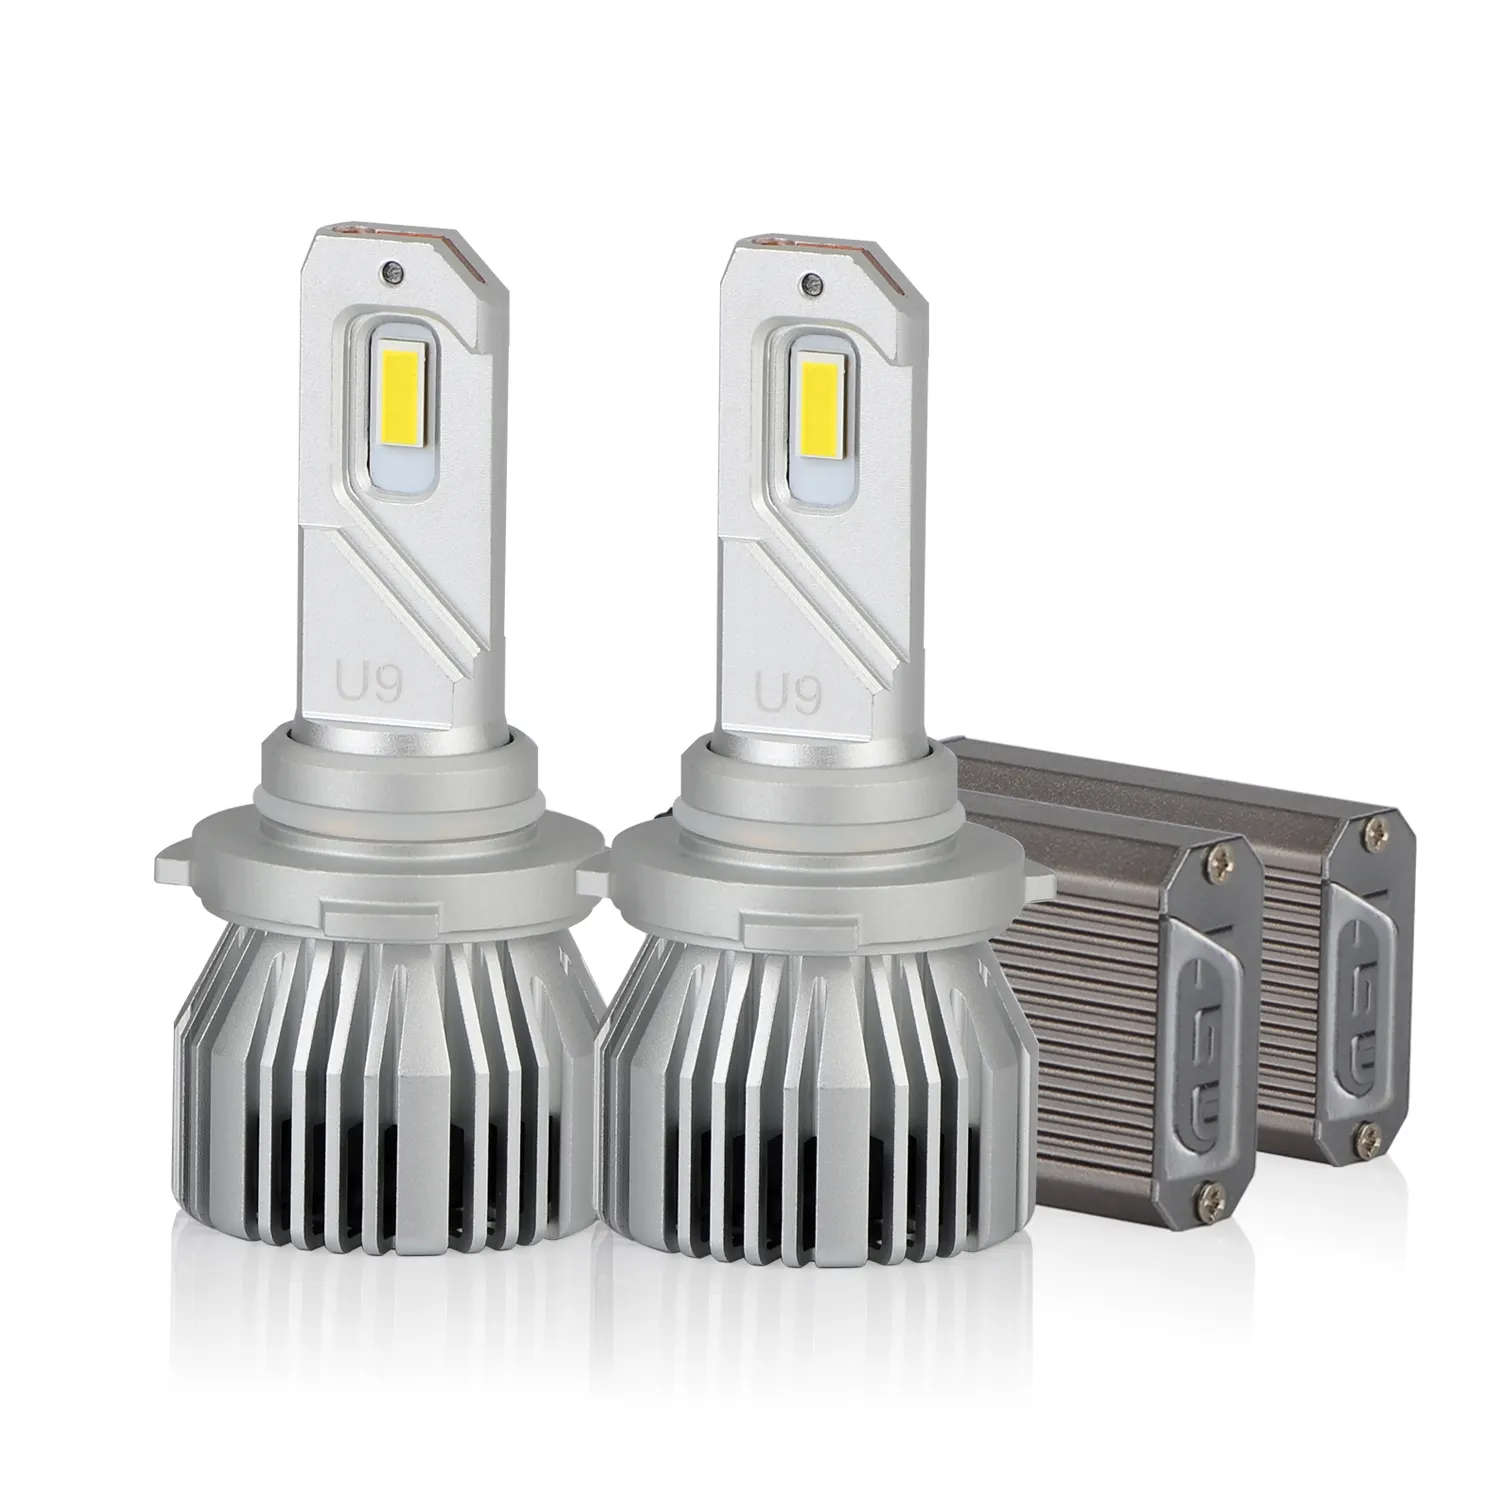 Bonsen U9 nuevo producto de alta potencia lumen mini led con canbus 10000LM 45W faros para coches sistema de iluminación led